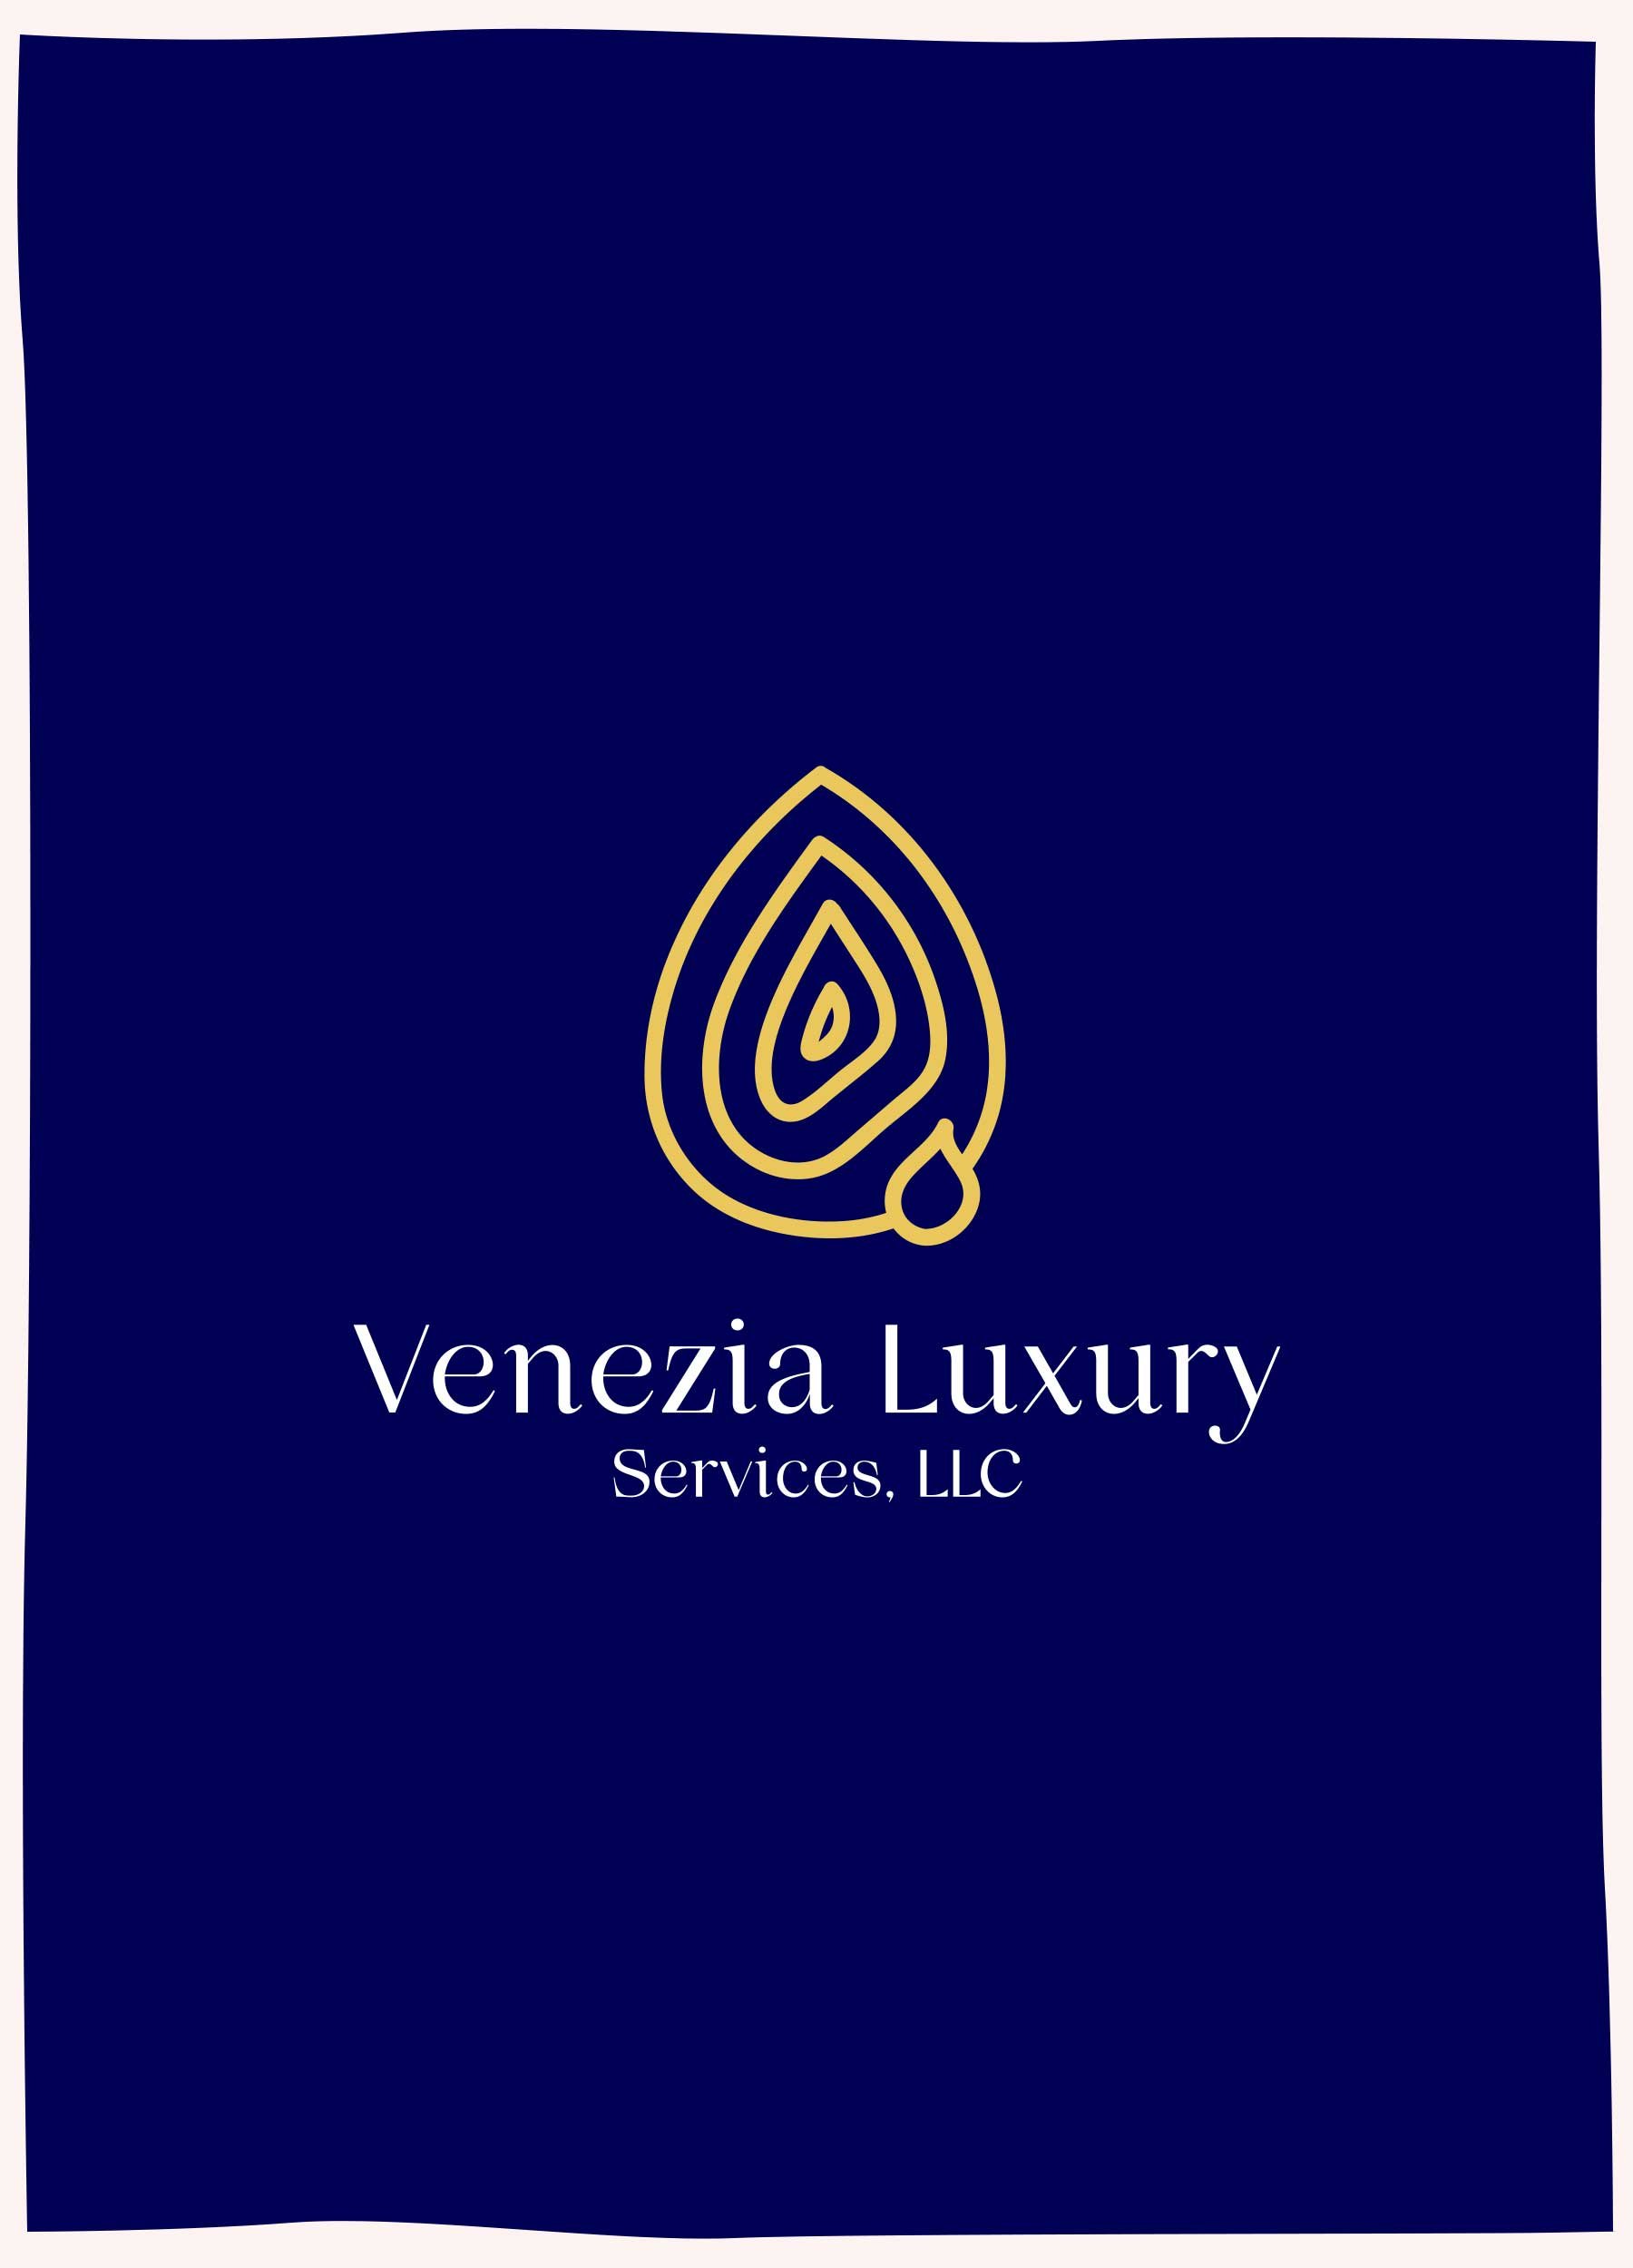 logo_venezia_angie_valdez.jpg